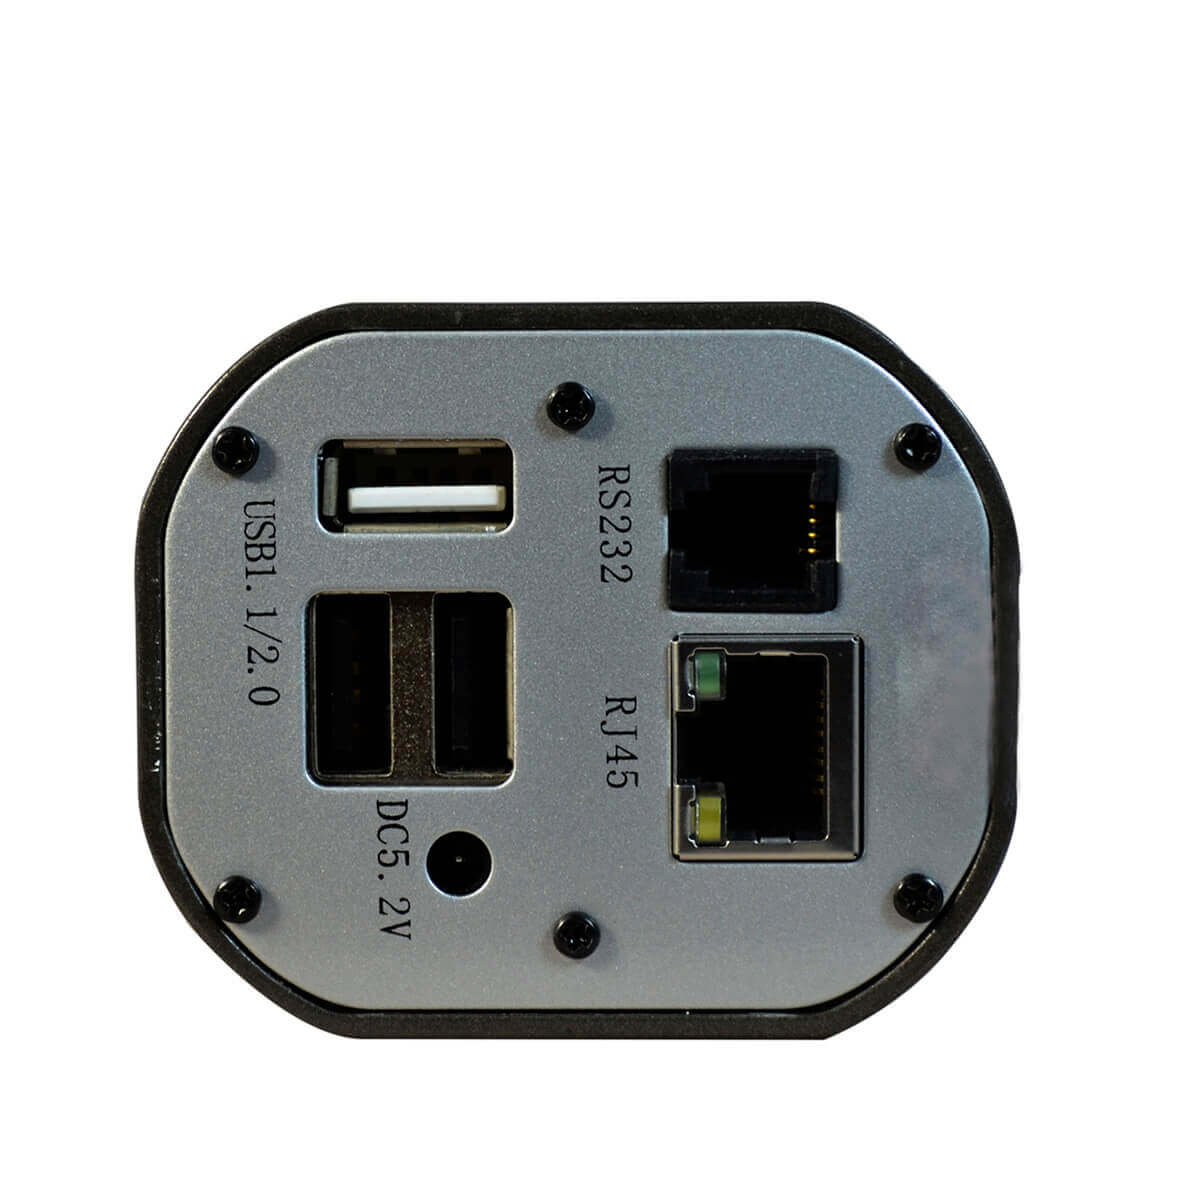 Camara IP tipo box para interiores, 1/3 CMOS 400TV, lente de 8mm, color plata